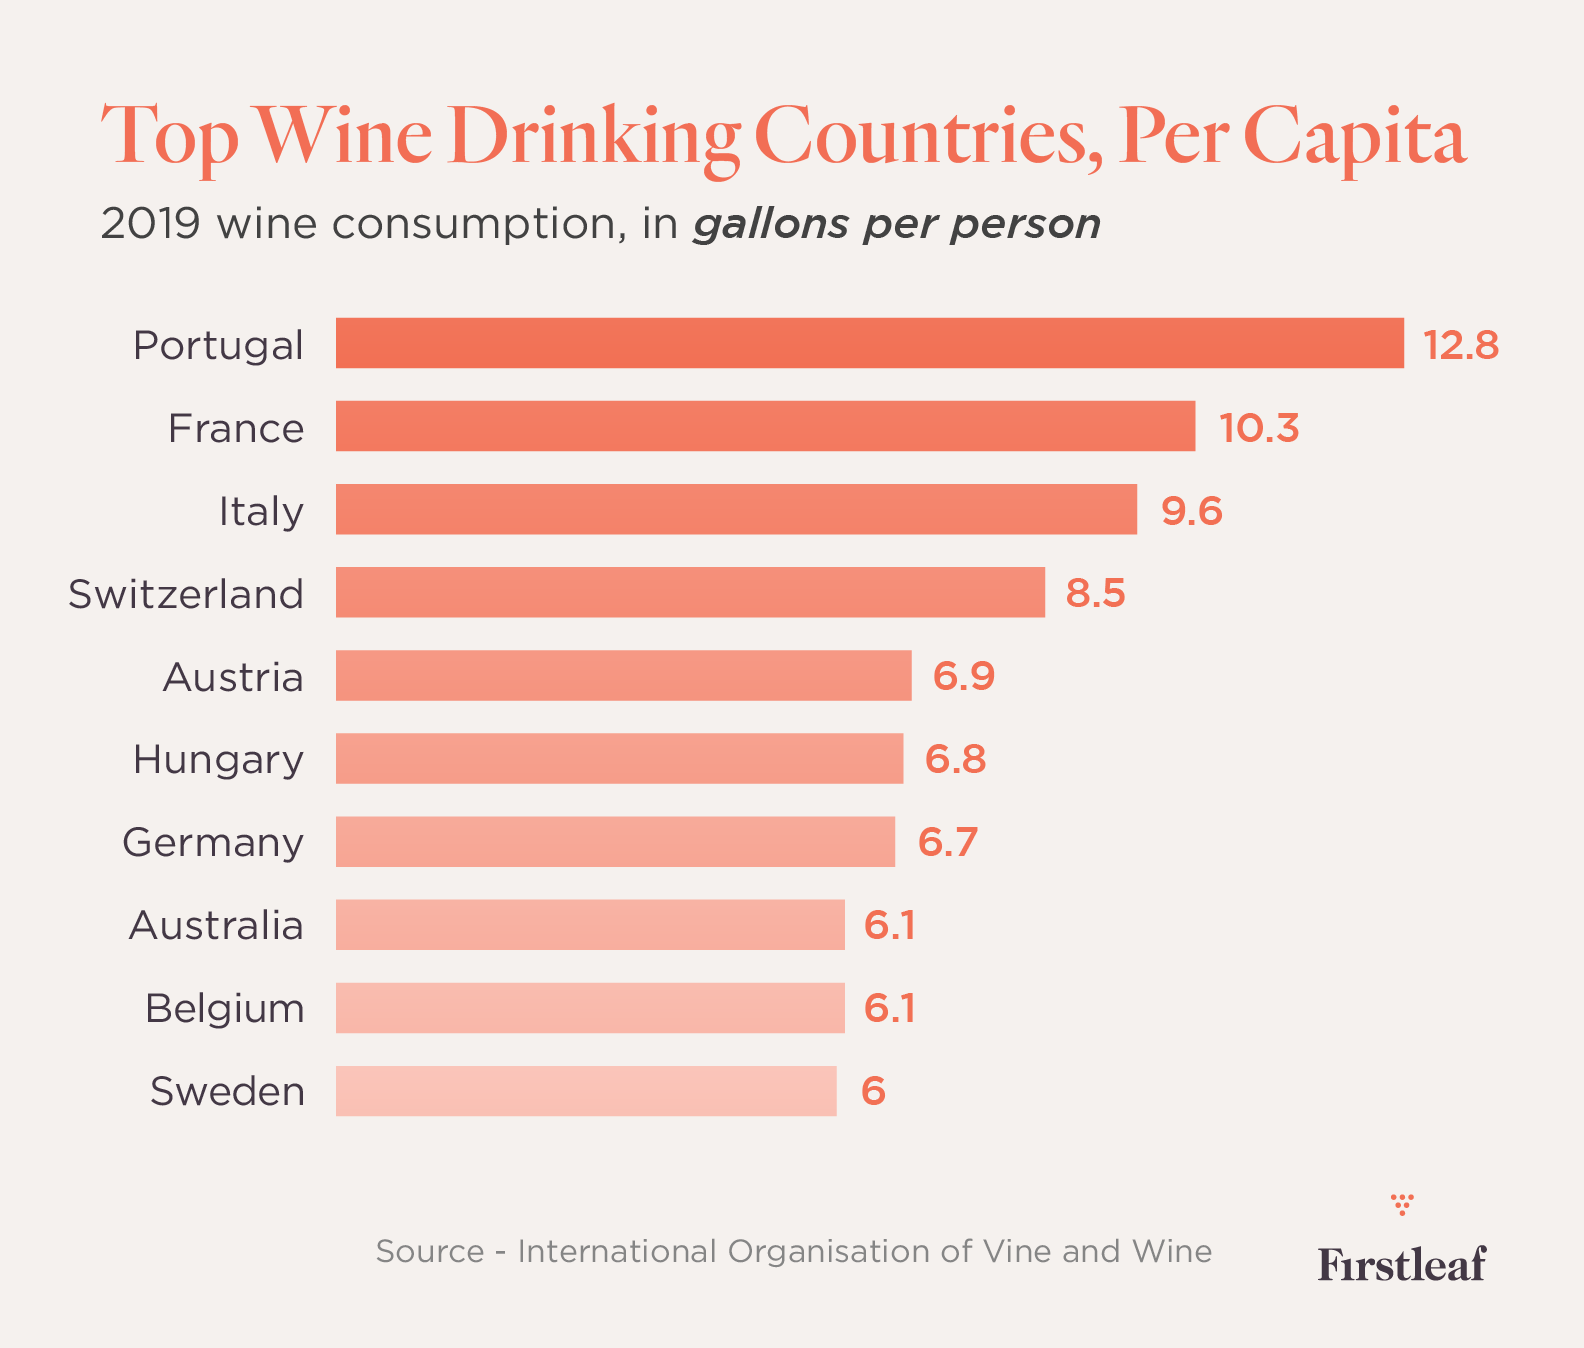 Top Wine Drinking Countries Per Capita